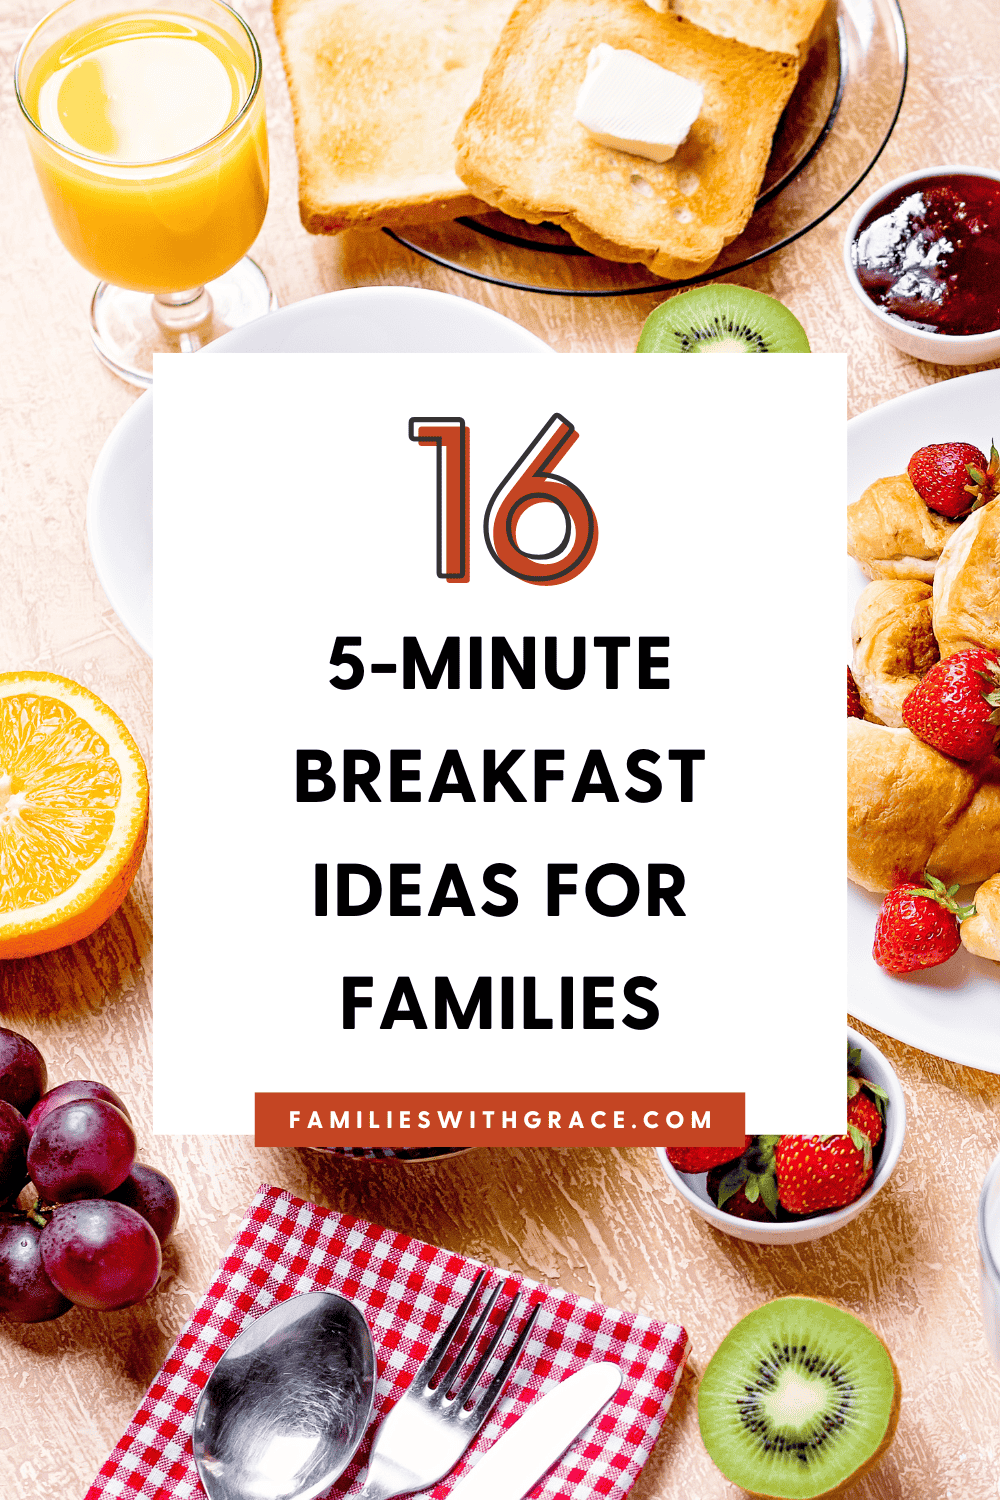 5-Minute breakfast ideas for families